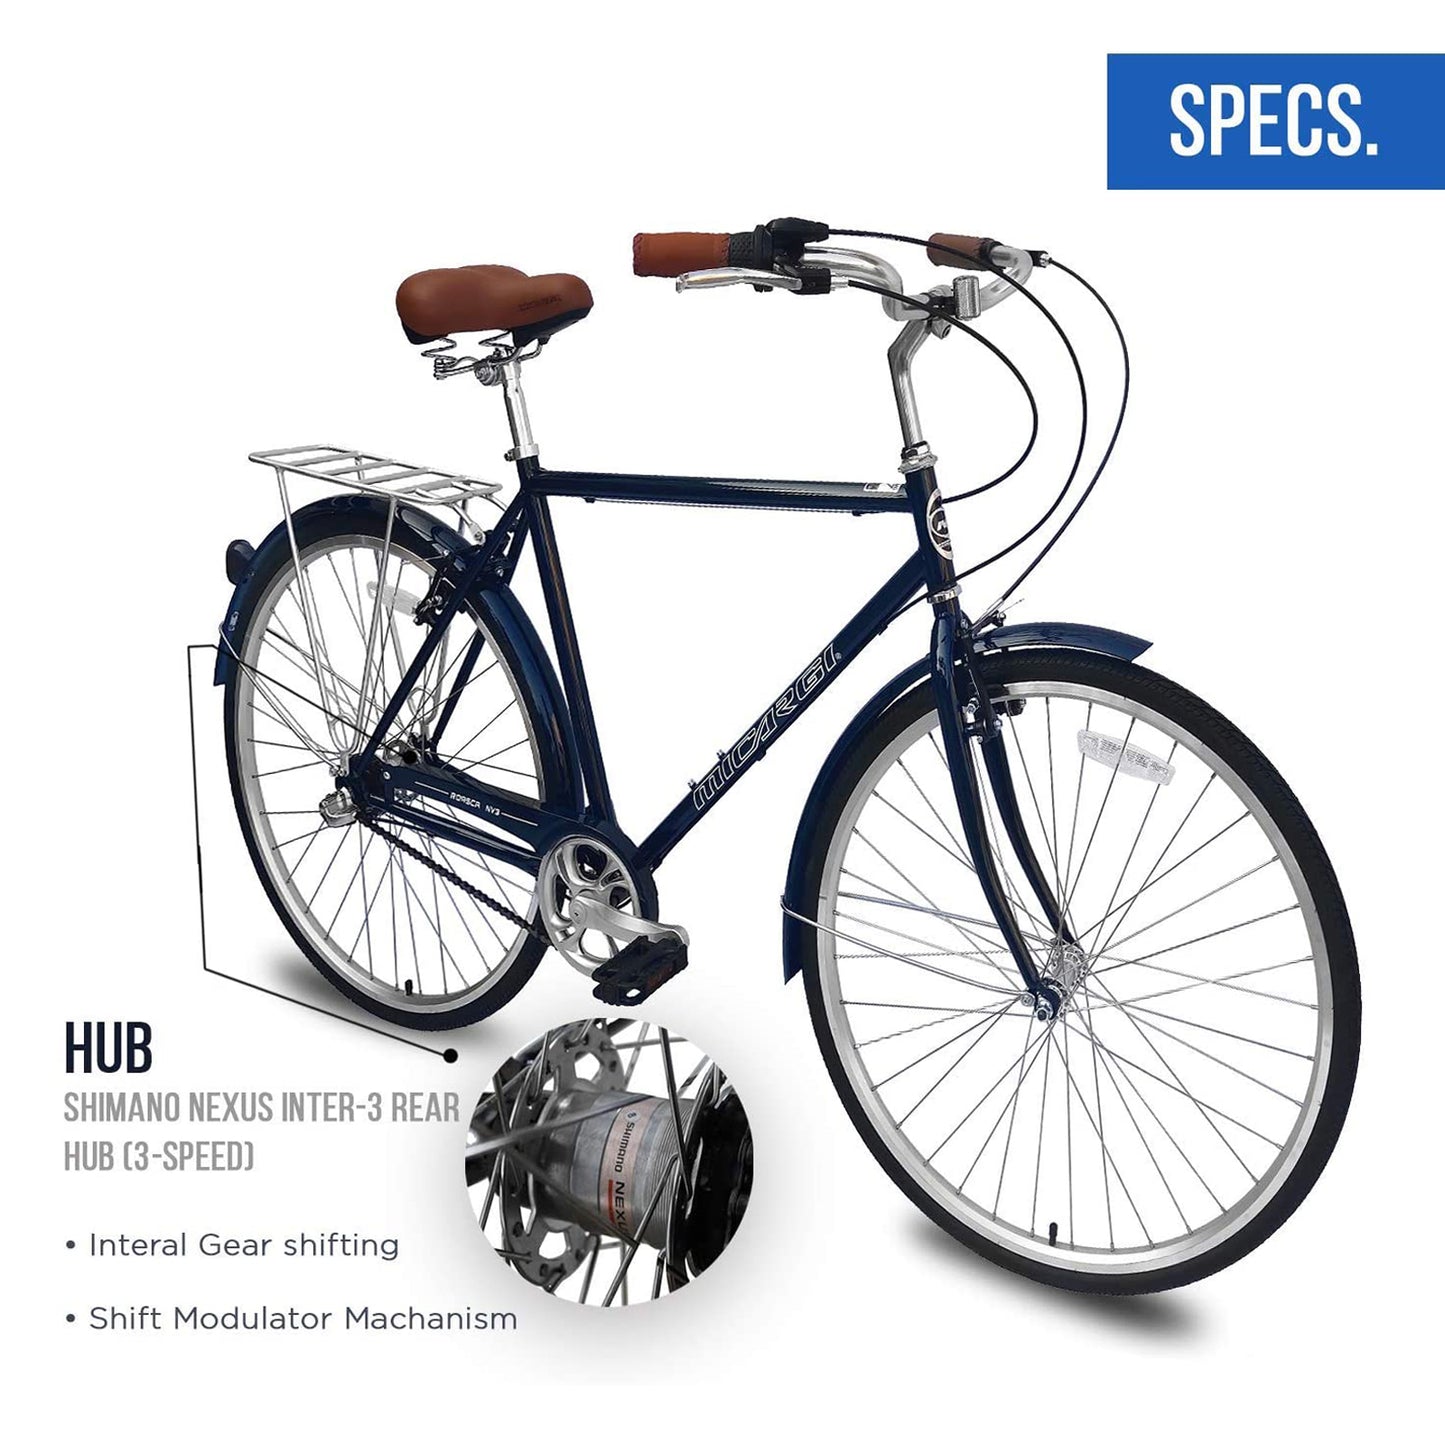 Micargi Roasca 700C 53cm Hybrid City Bikes 7 Speed / Inter-3 Three Speed